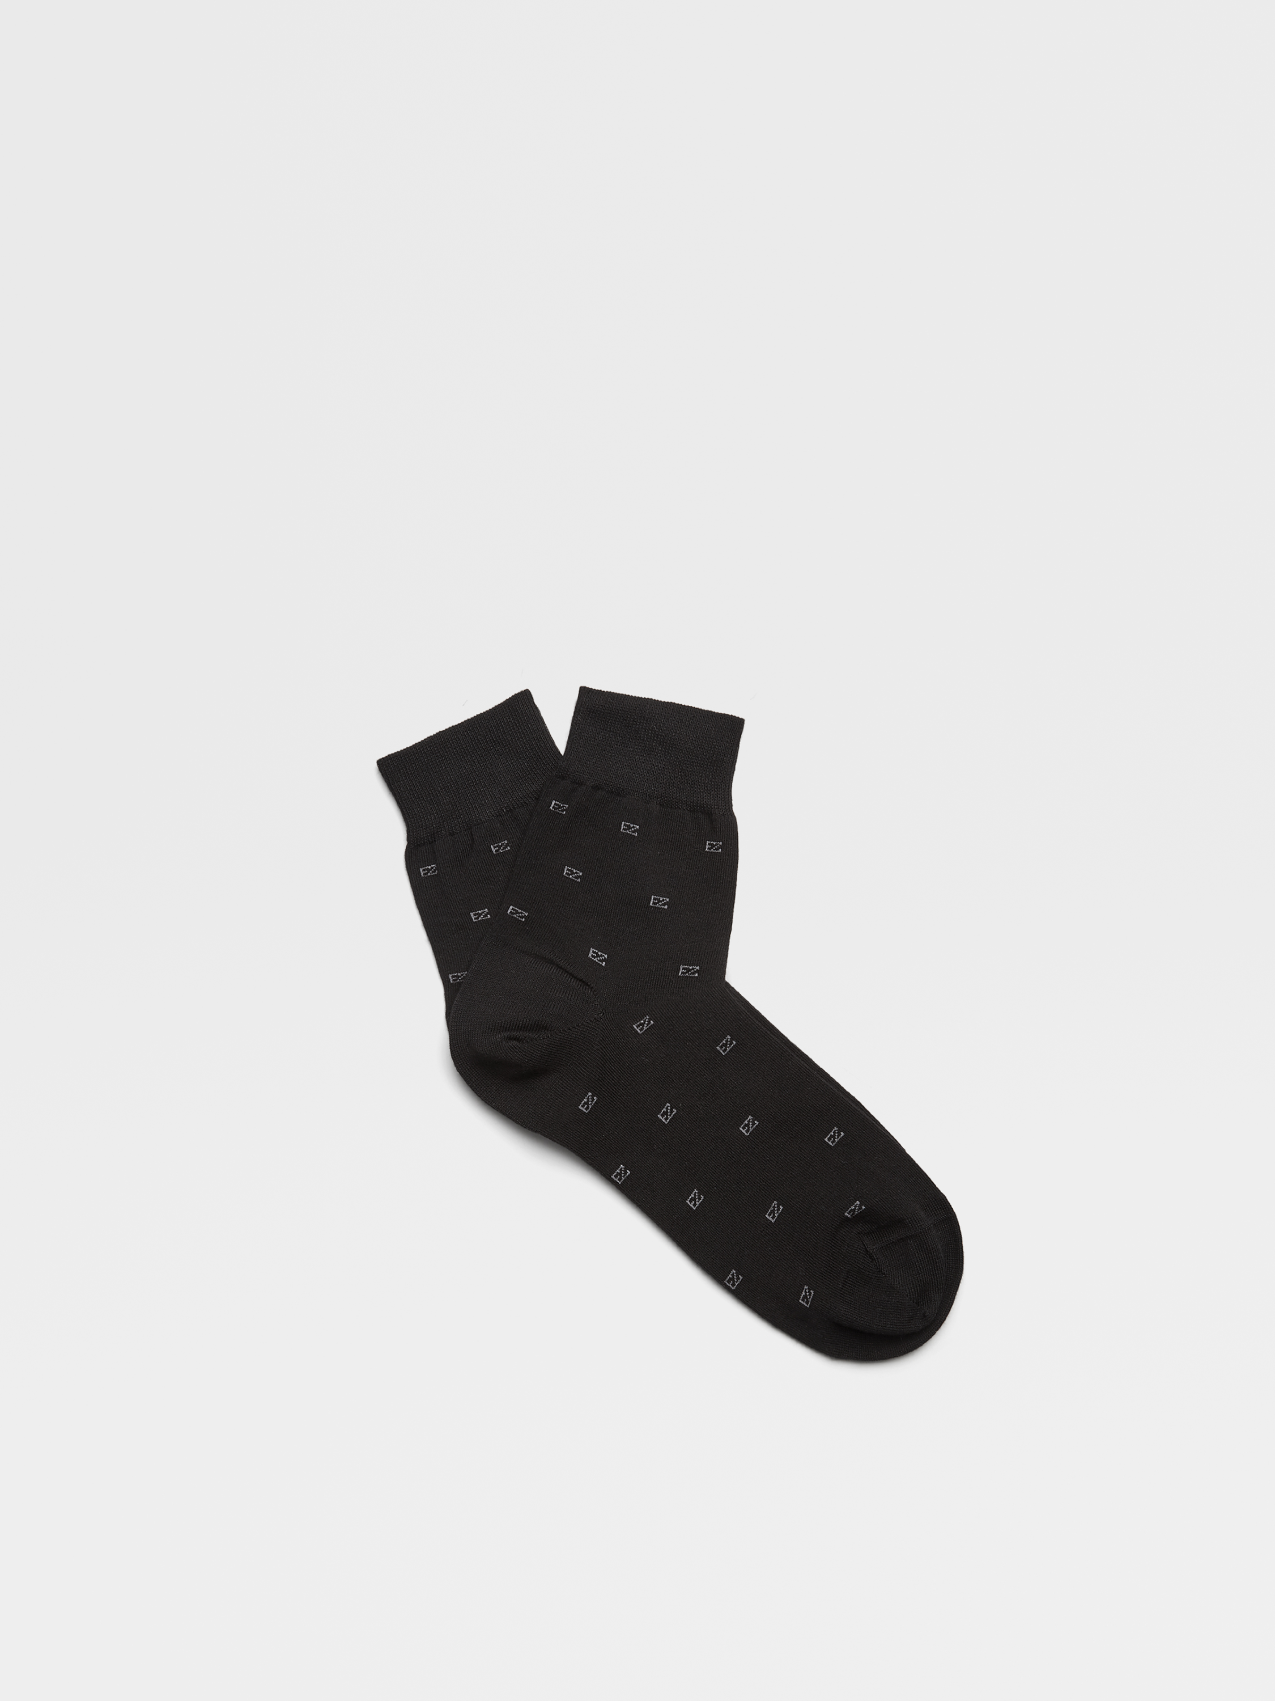 Black Cotton Blend Iconic EZ Socks